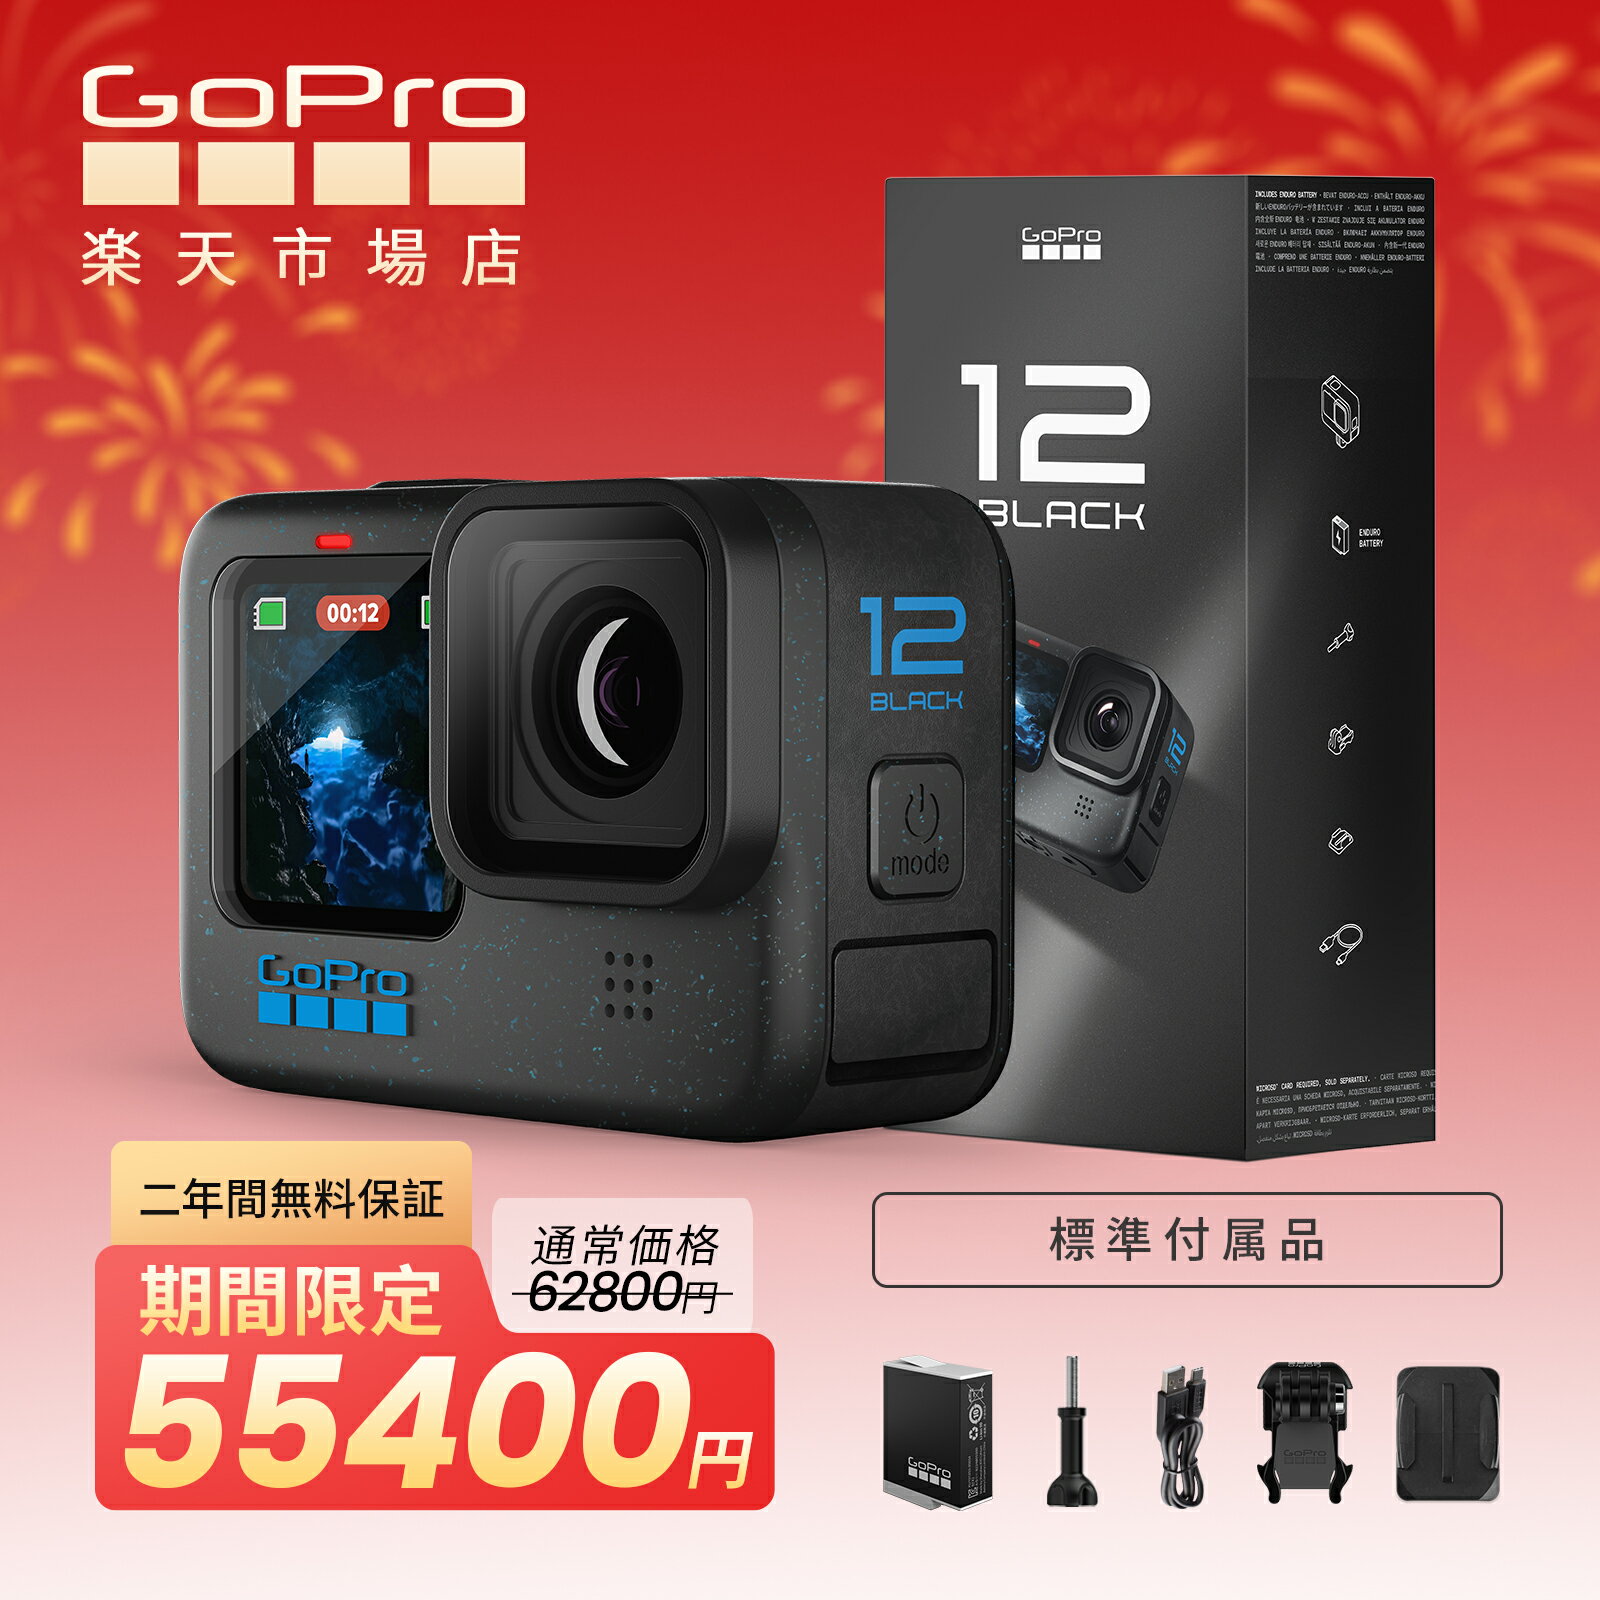 GoPro Hero12 Black 【二年間無料品質保証】【日本国内正規品】 ゴープロ ごーぷろ アクションカメラ HyperSmooth 6.0 HDRビデオ